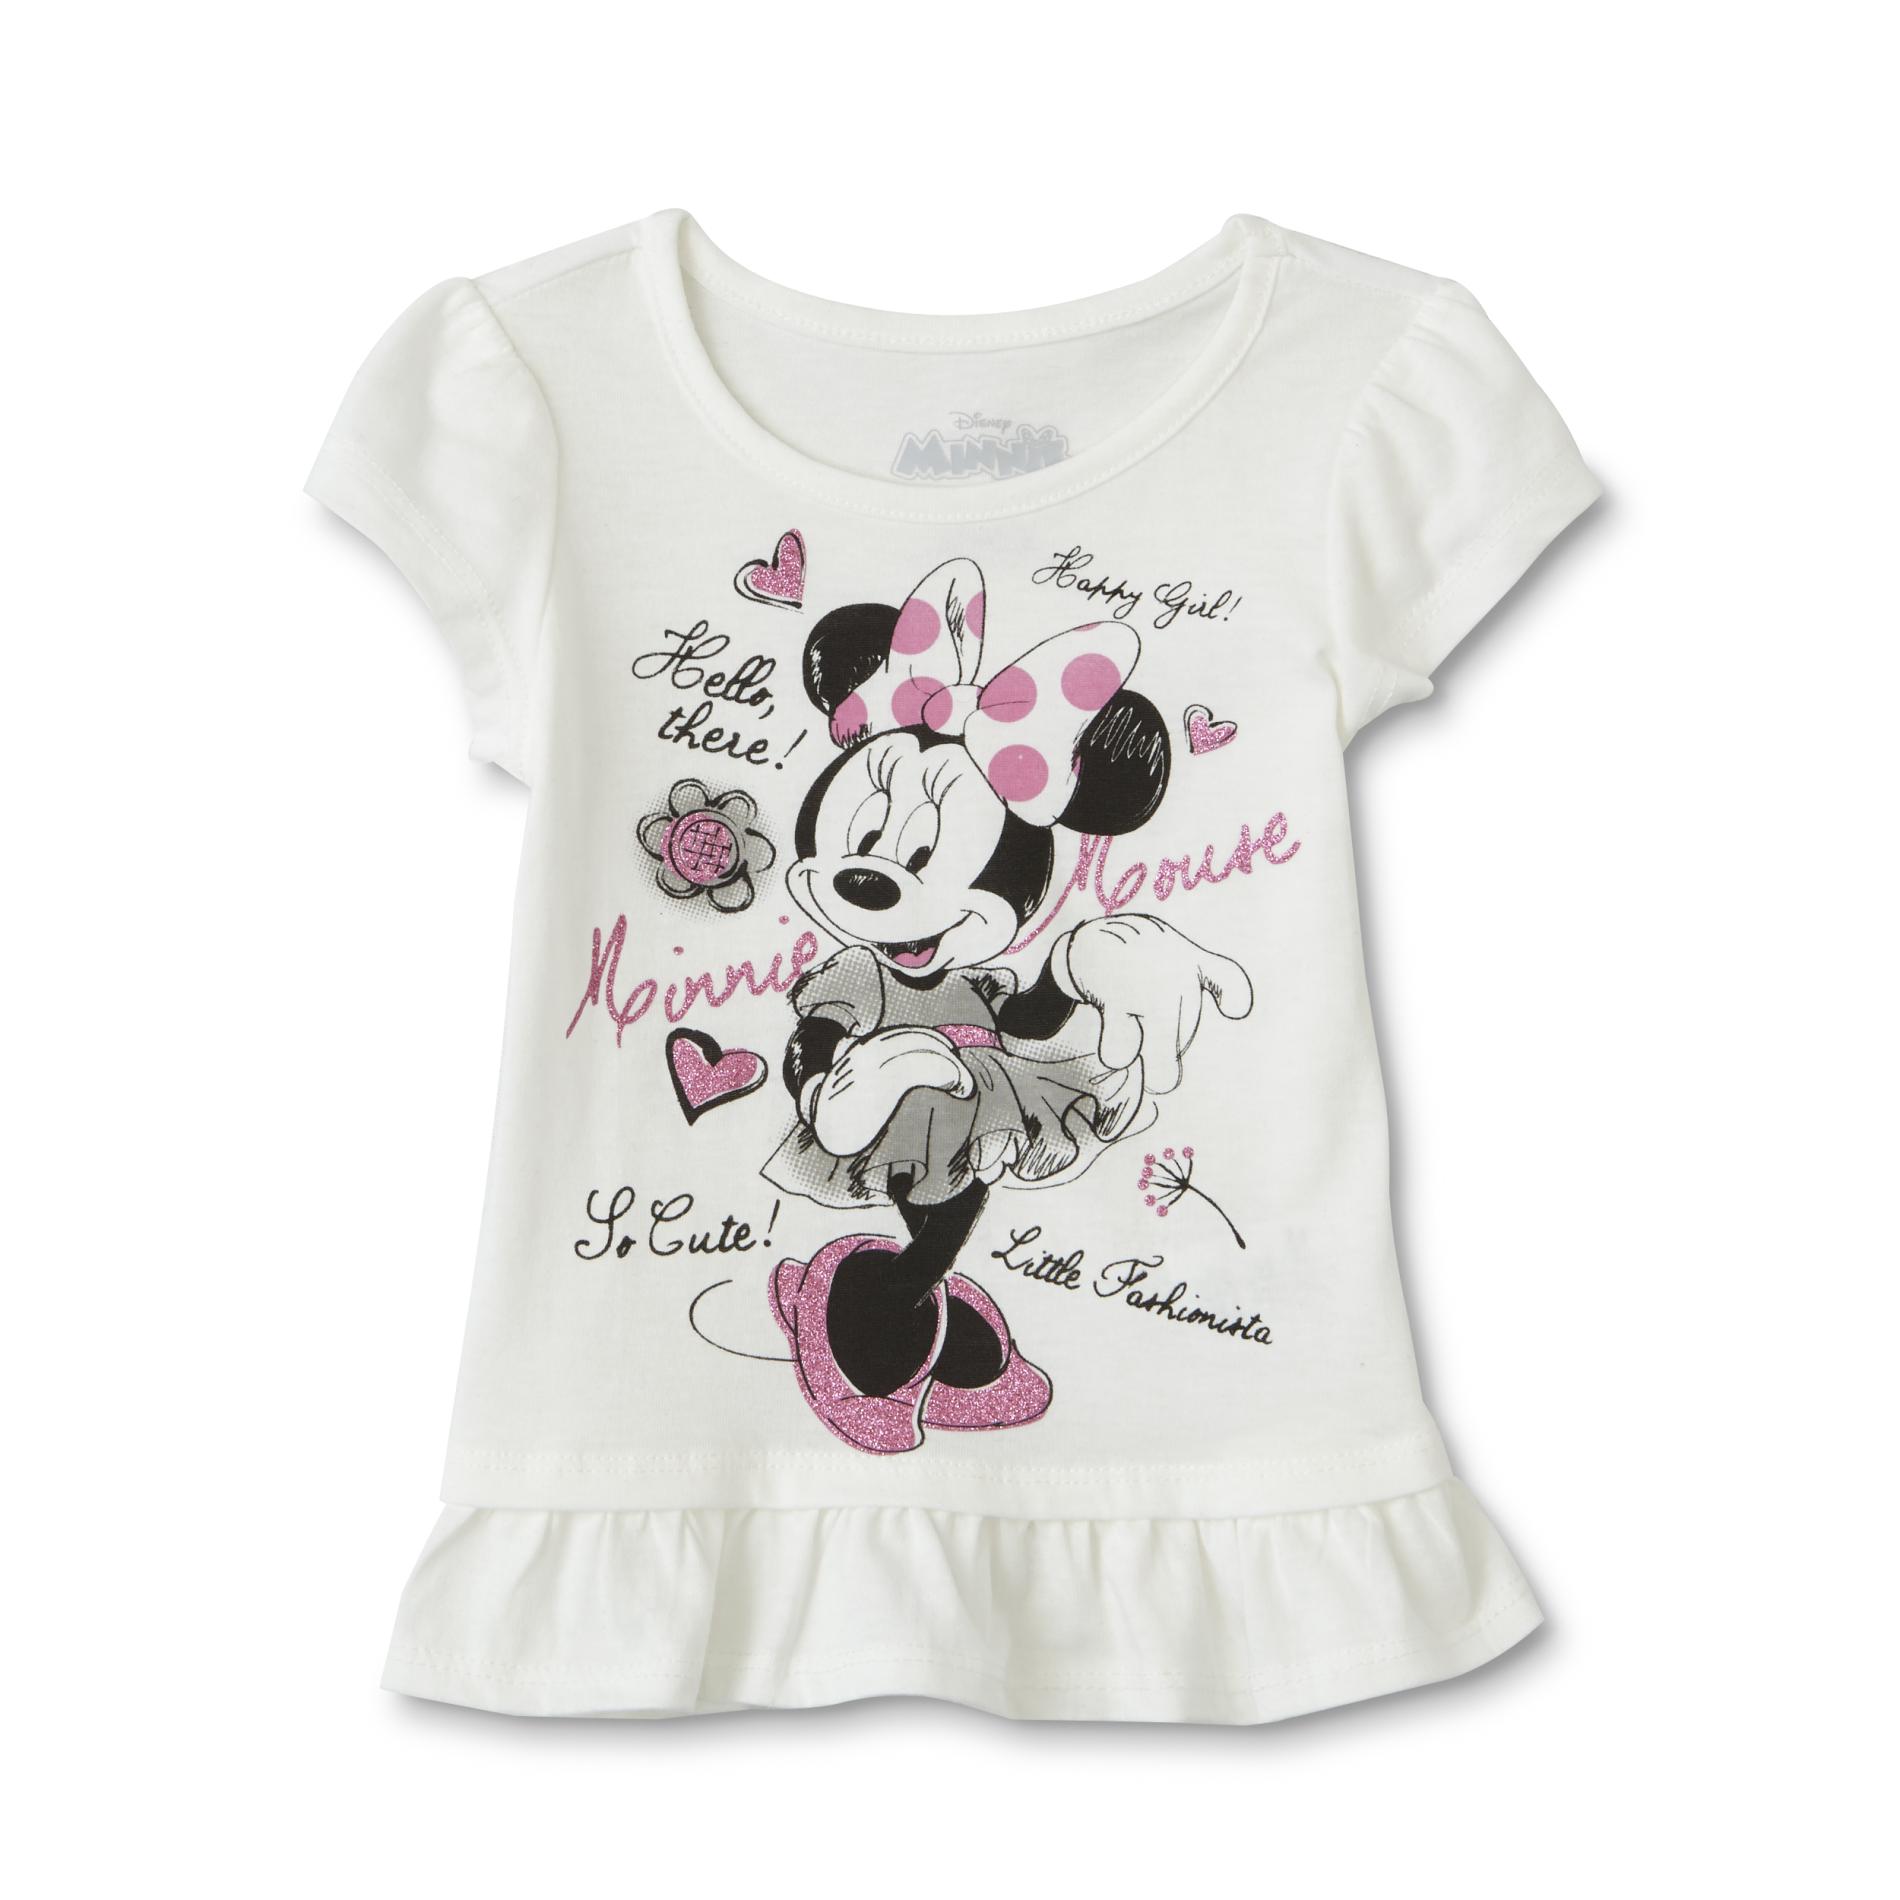 Toddler Girls' Ruffle T-Shirt - Minnie Mouse